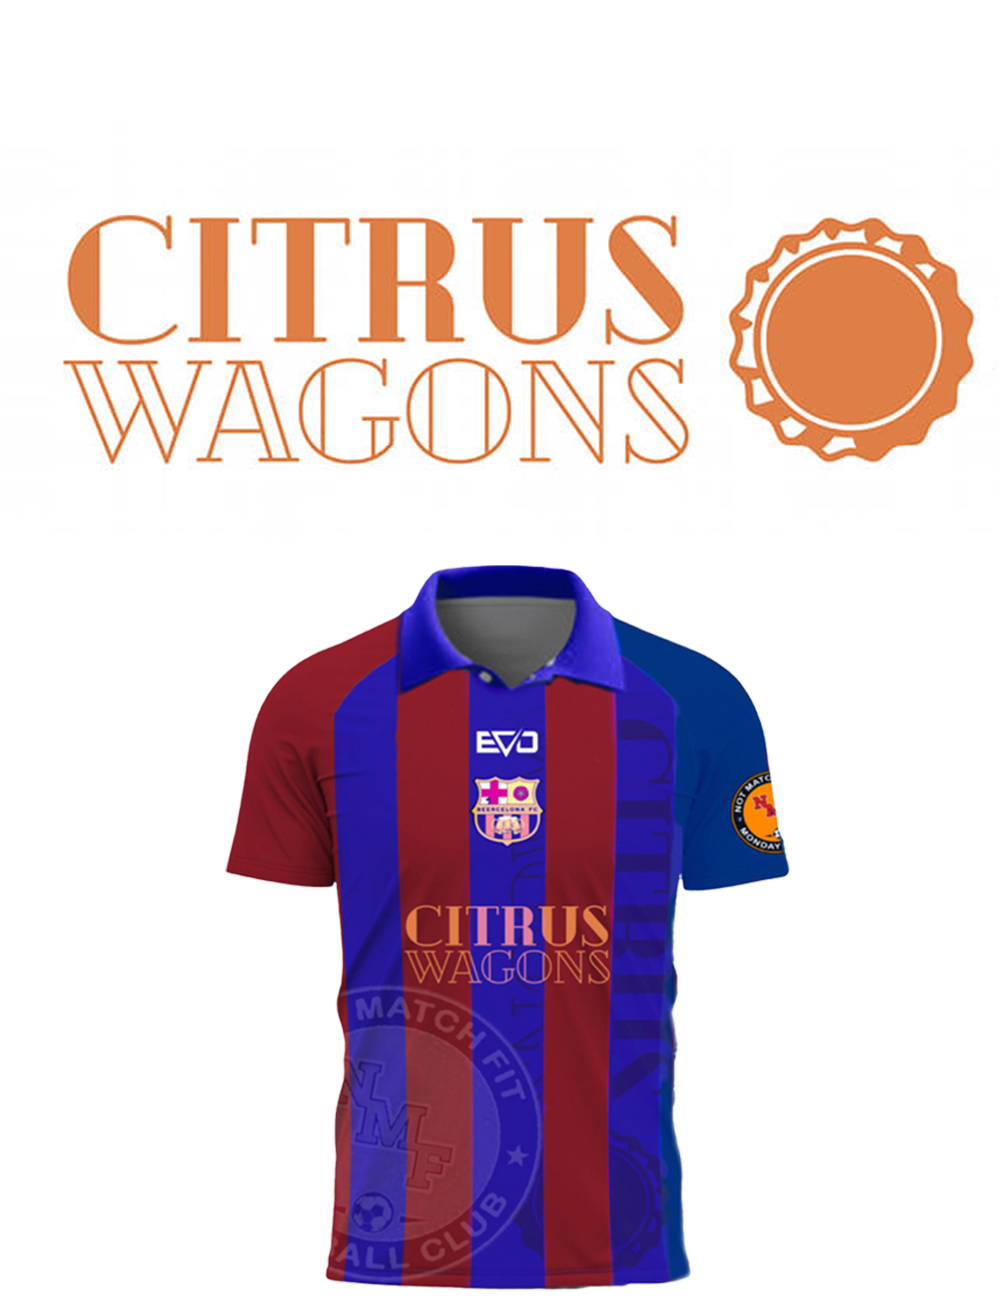 Citrus Wagons Logo